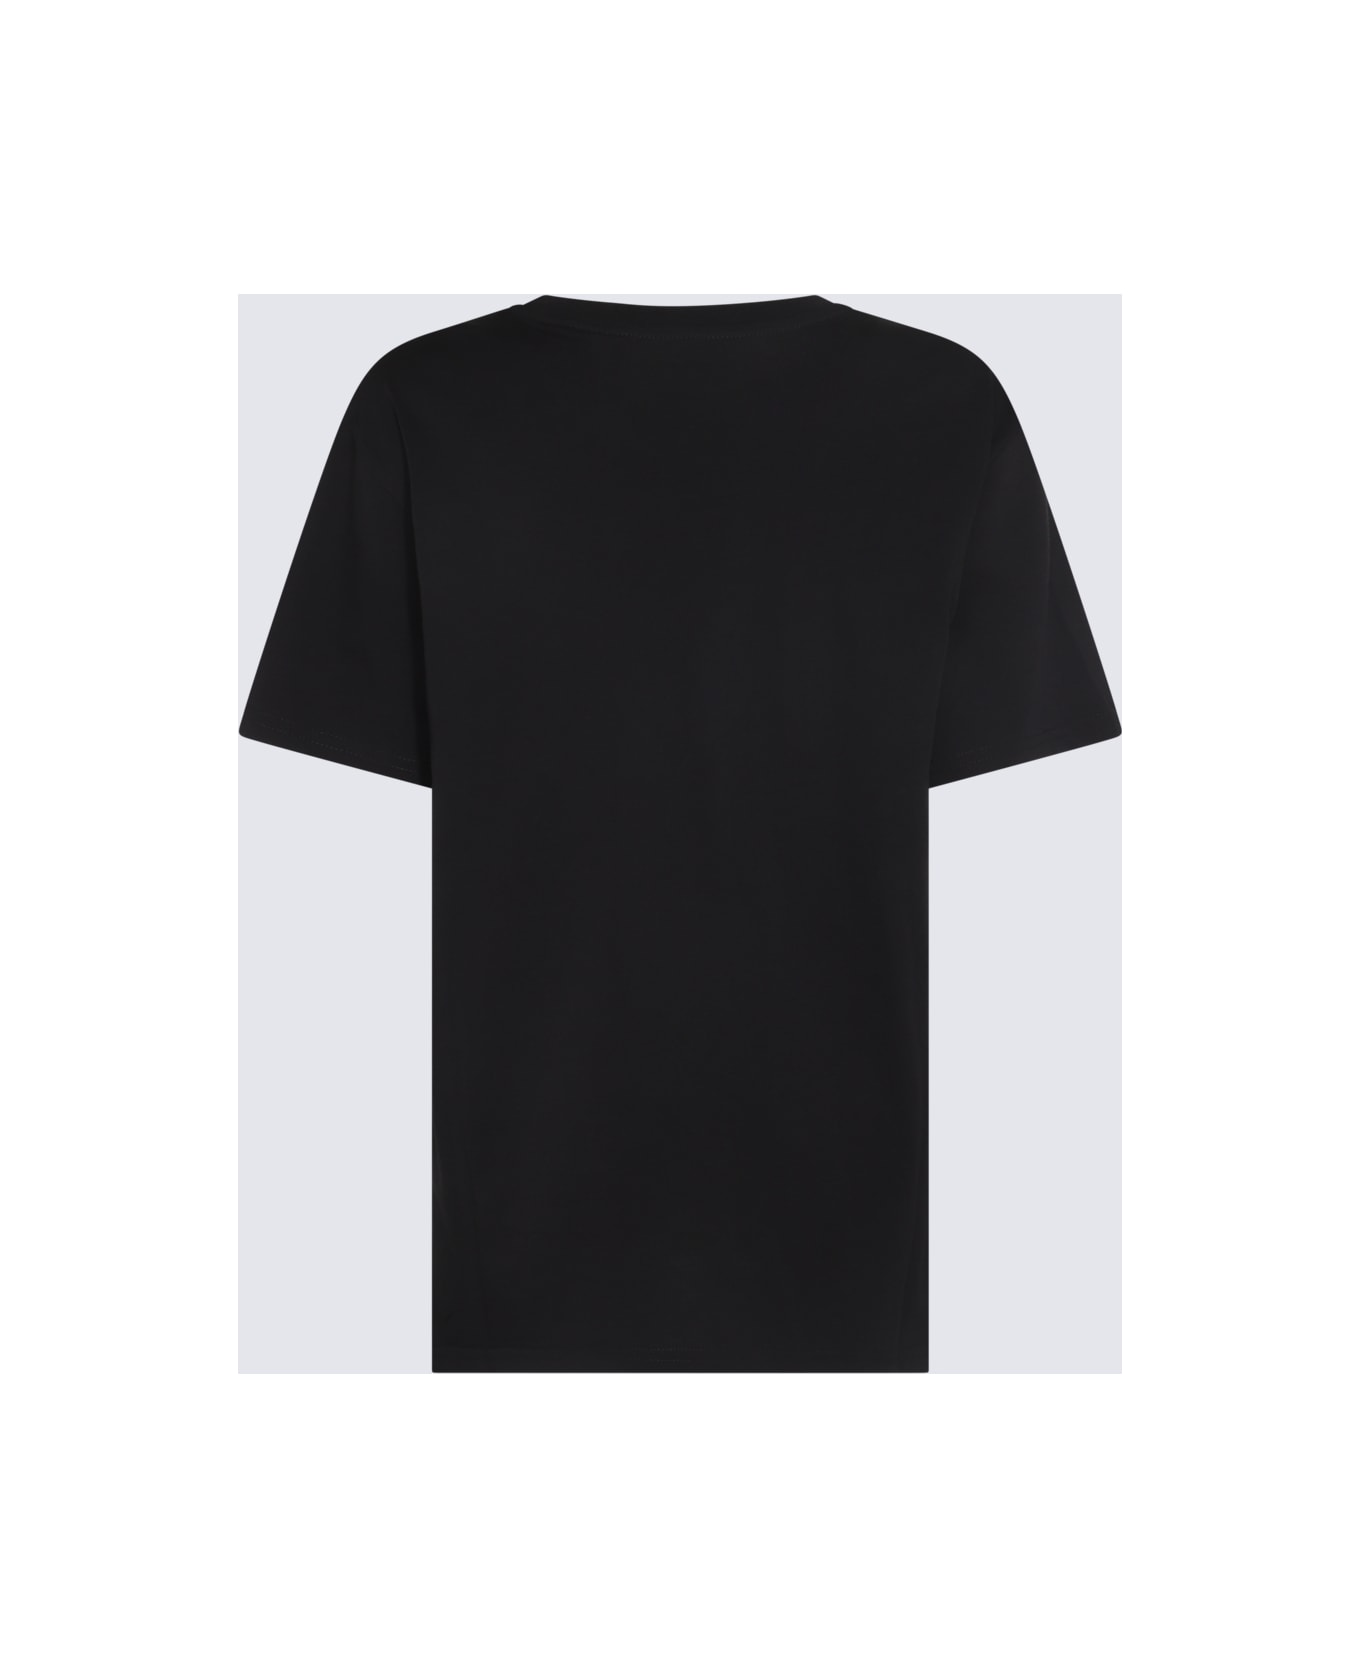 Moschino Black Cotton T-shirt - Nero シャツ